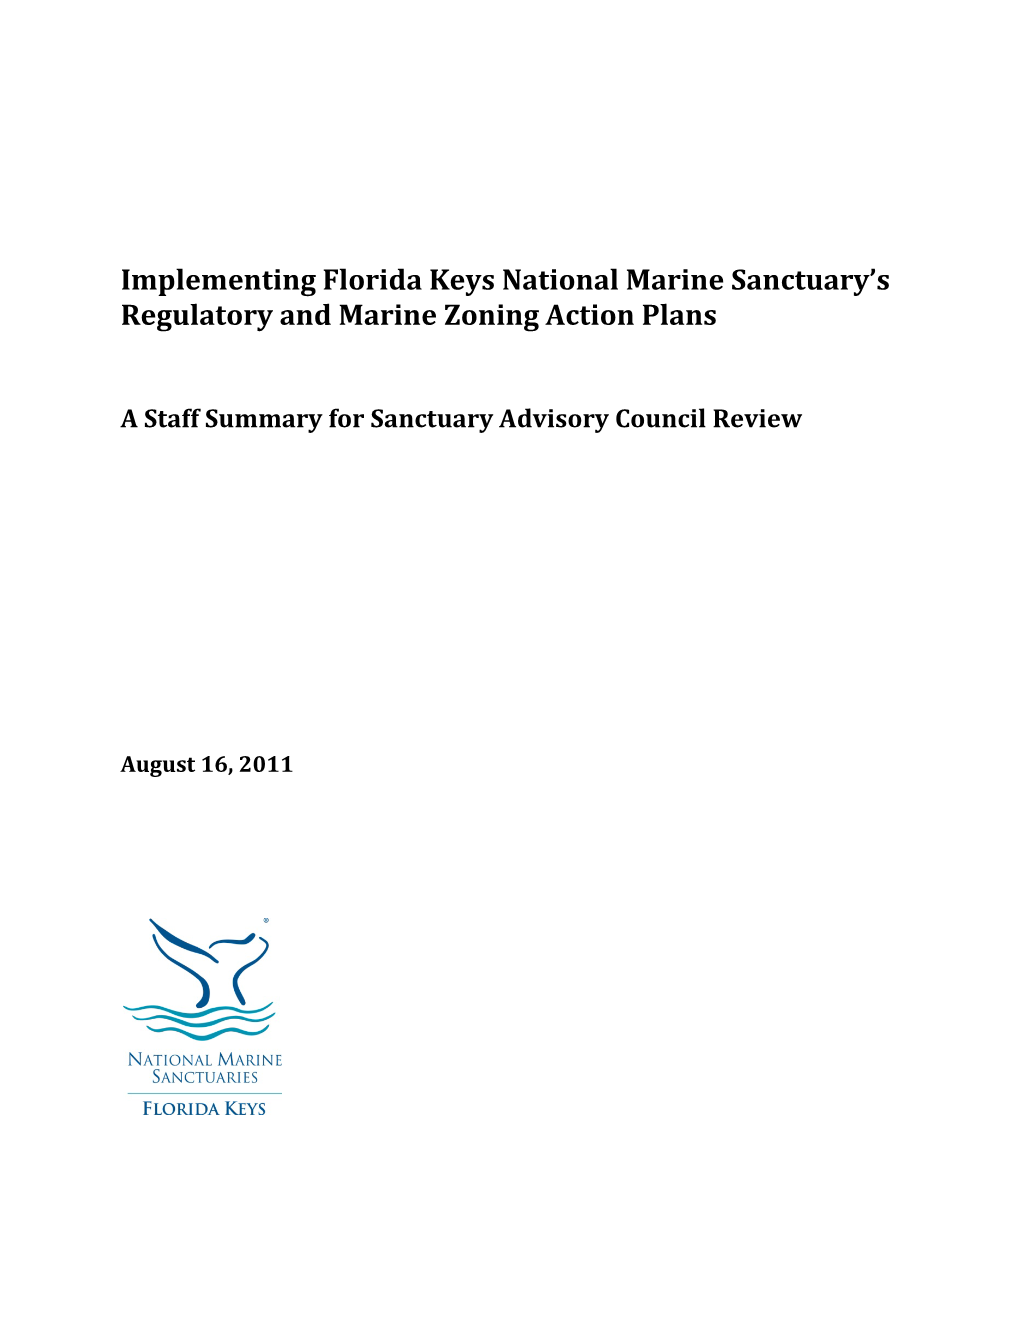 Implementing Florida Keys National Marine Sanctuary's Regulatory And